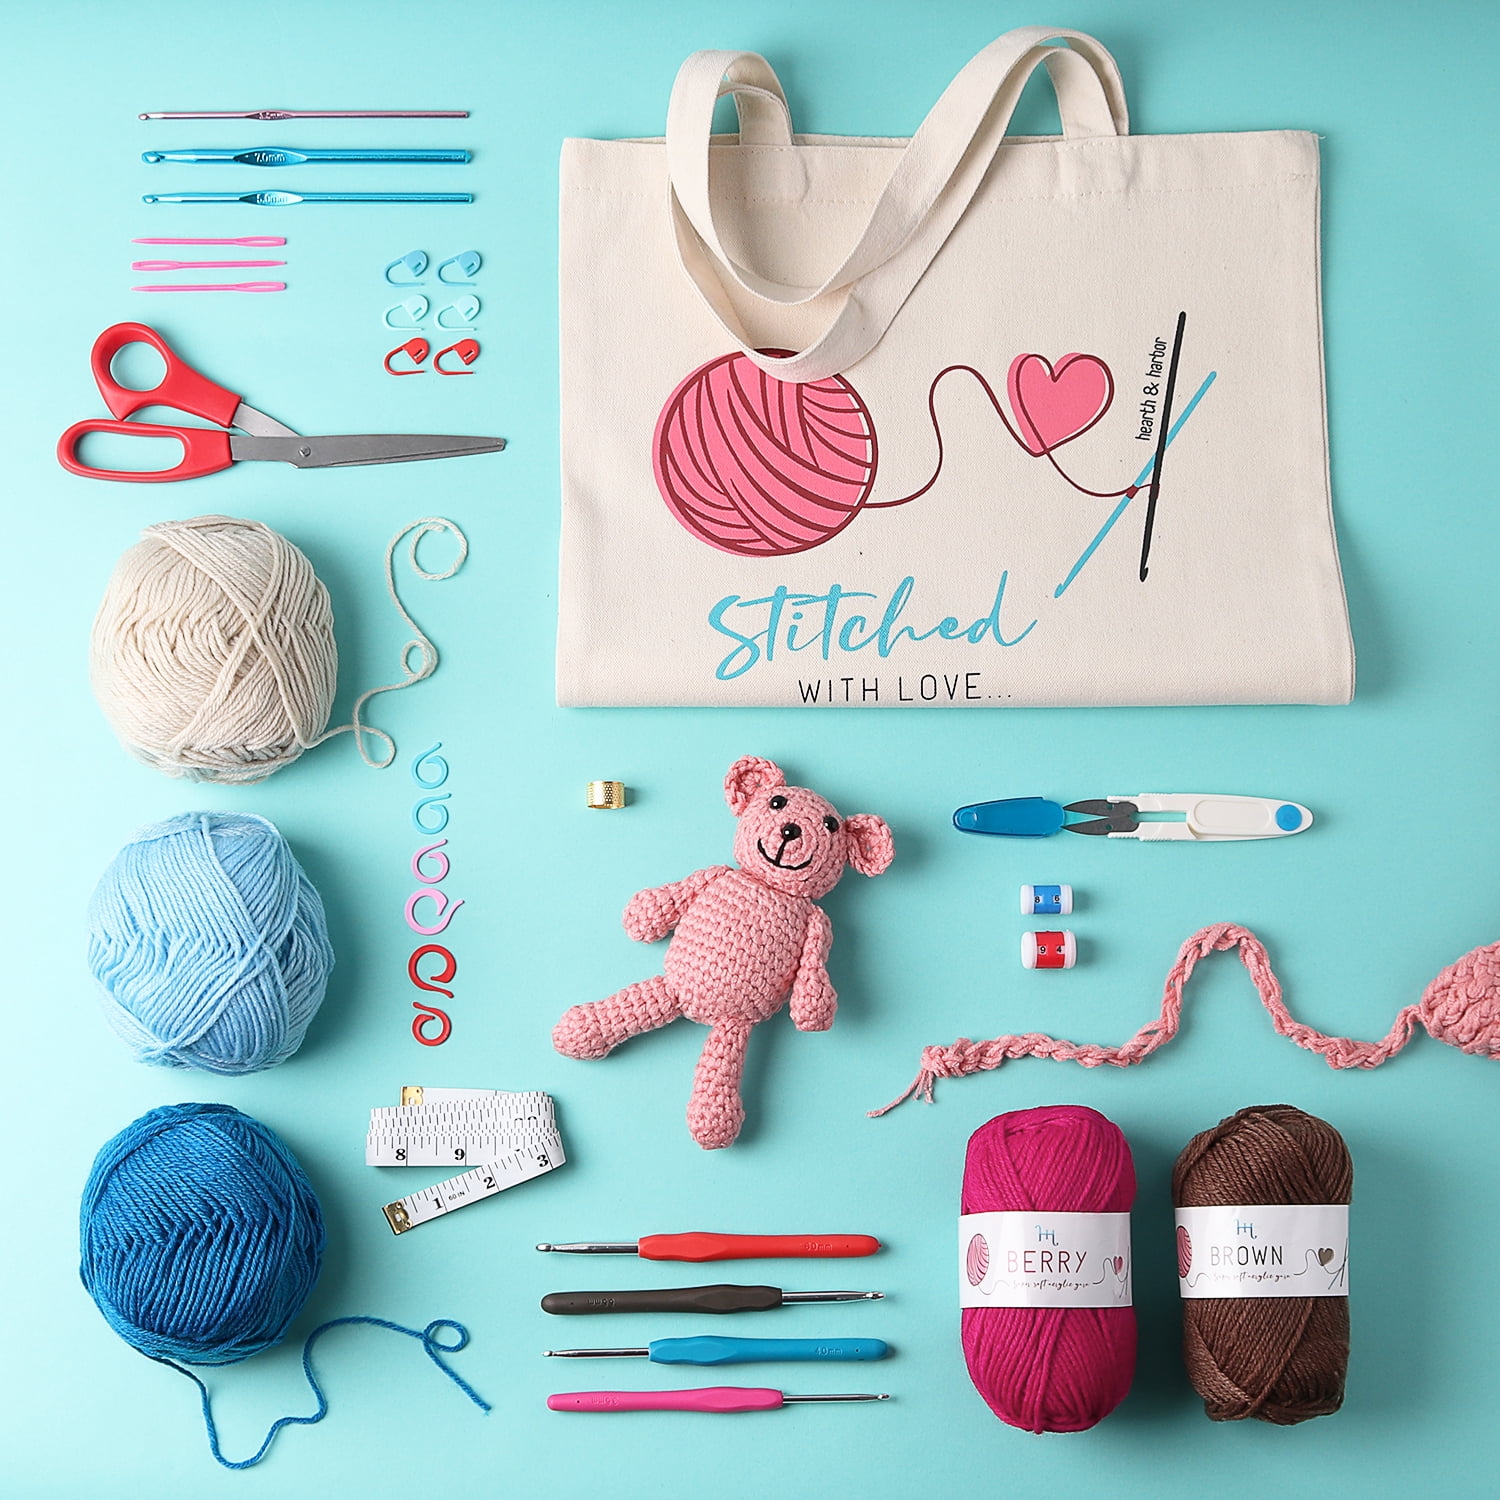 Hearth & Harbor hearth & harbor crochet kit for beginners adults